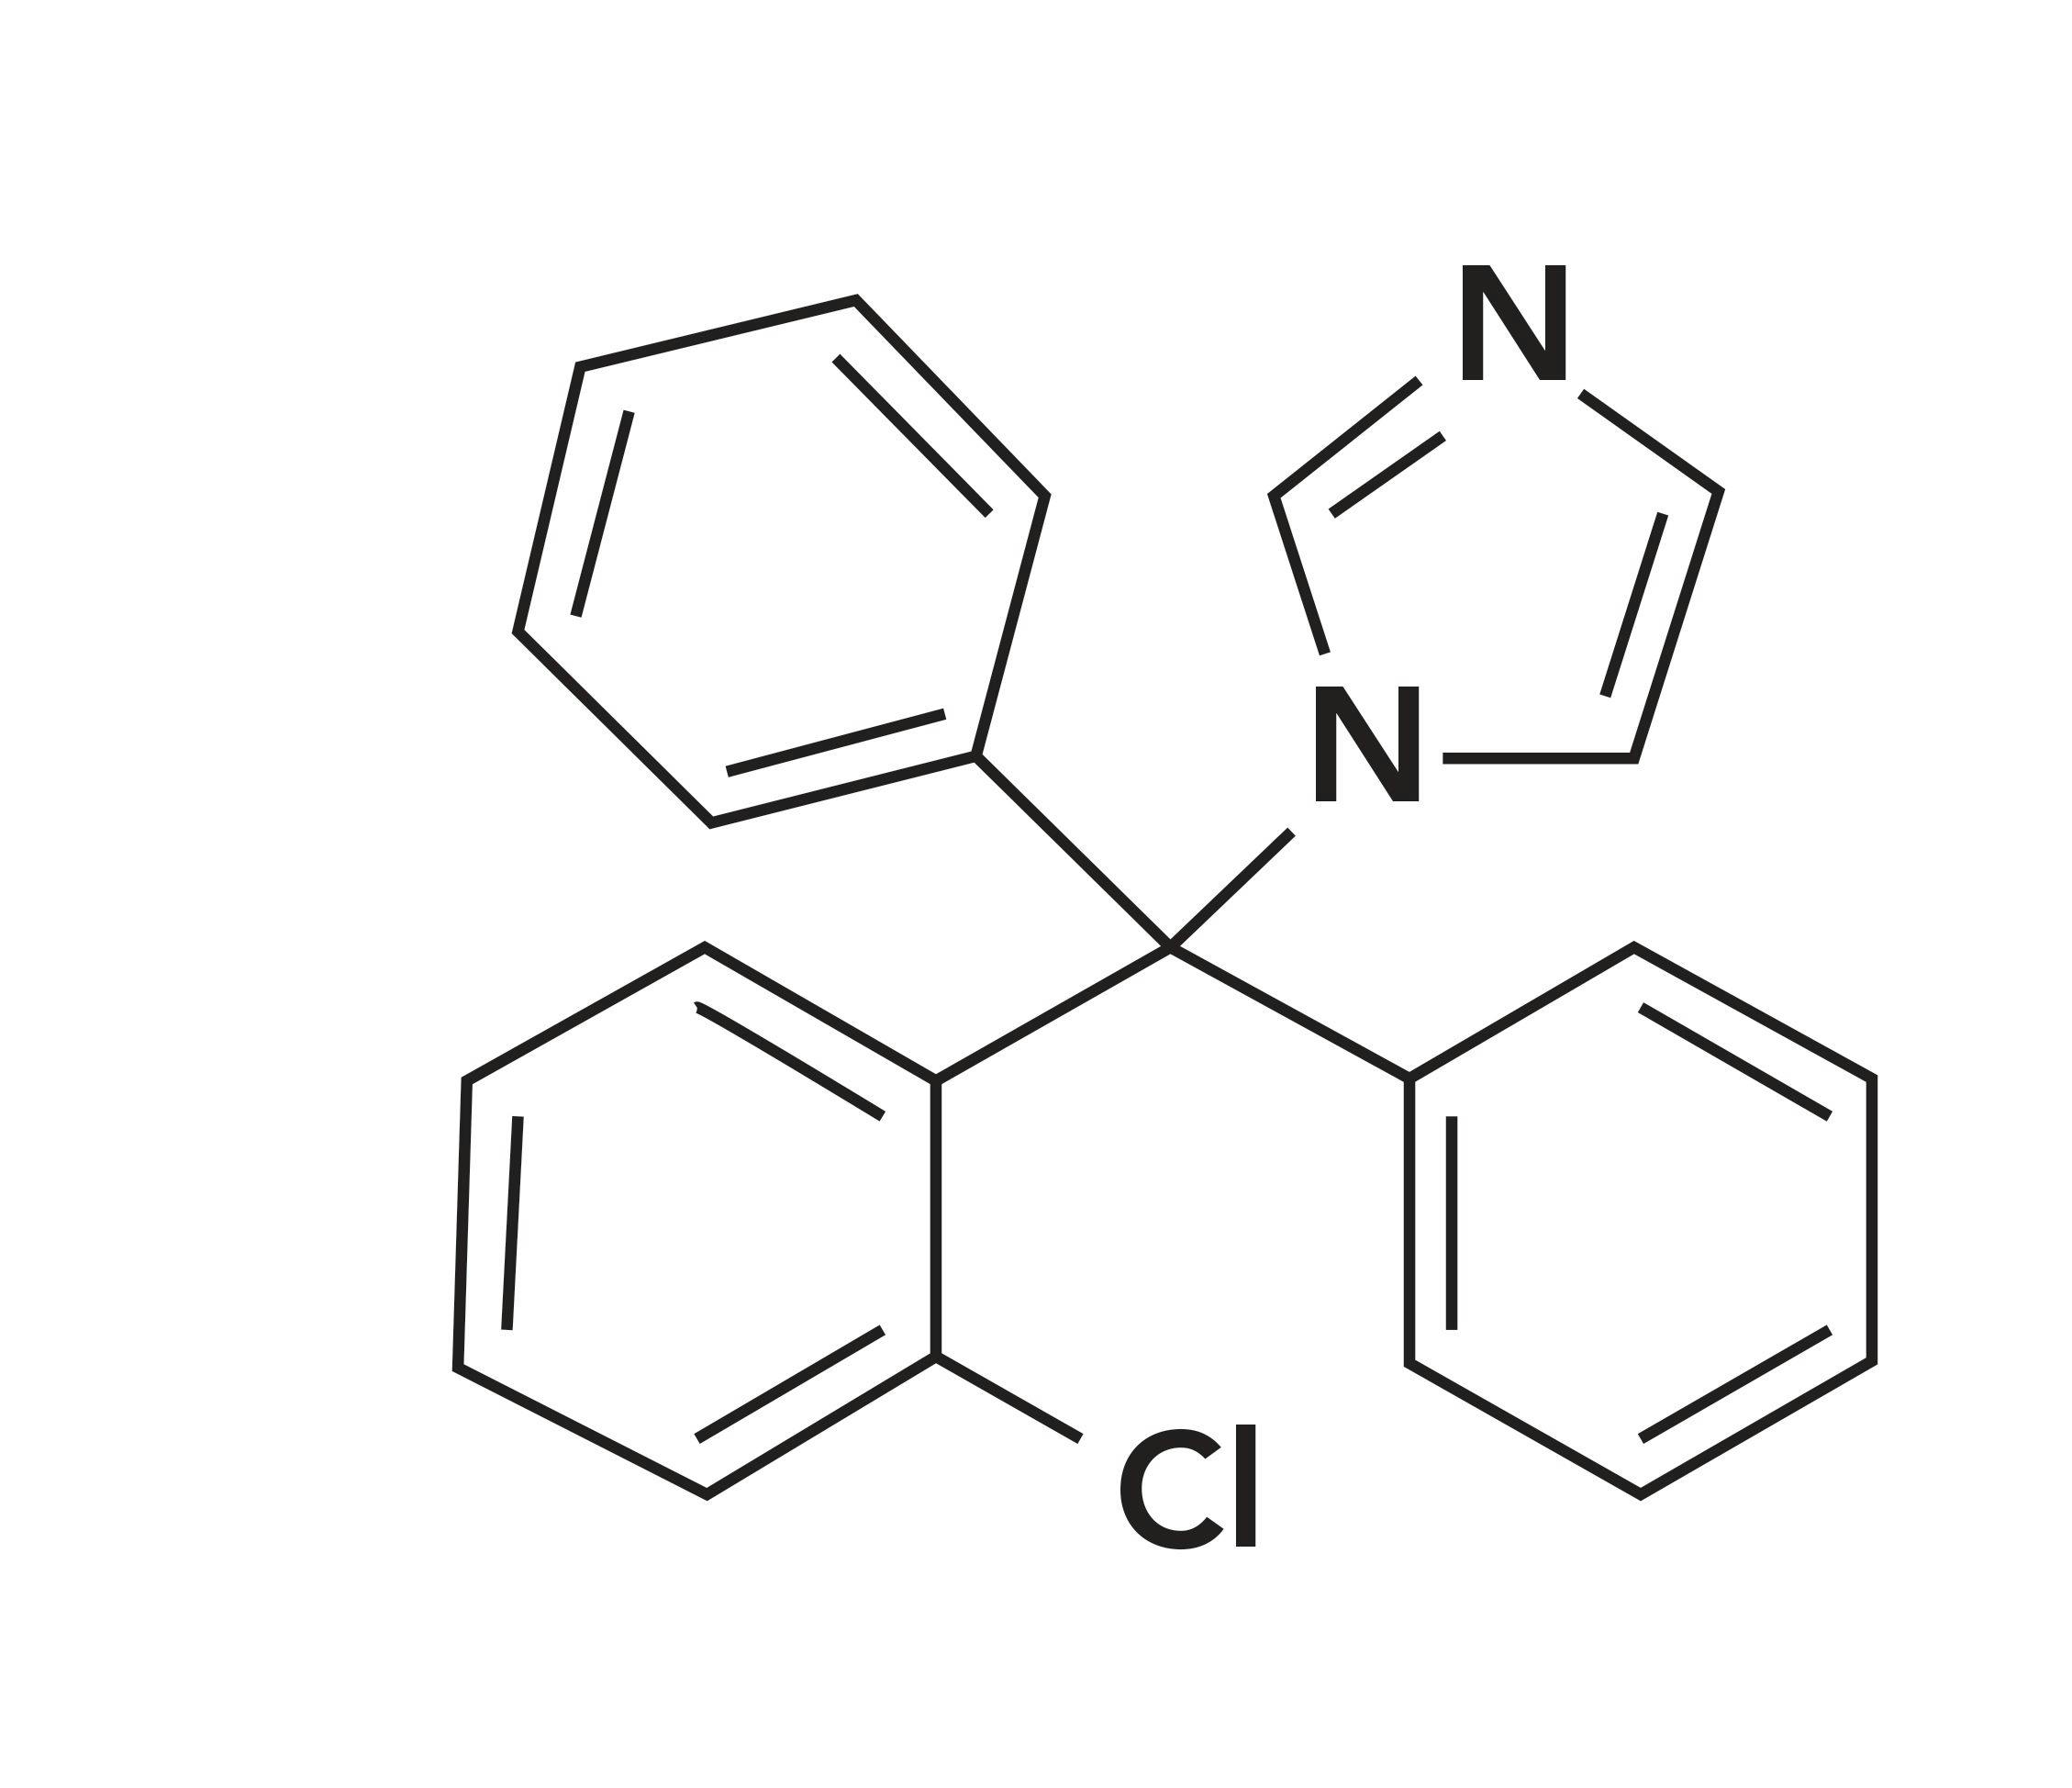 Figure 3: Chemical structure of clotrimazole.